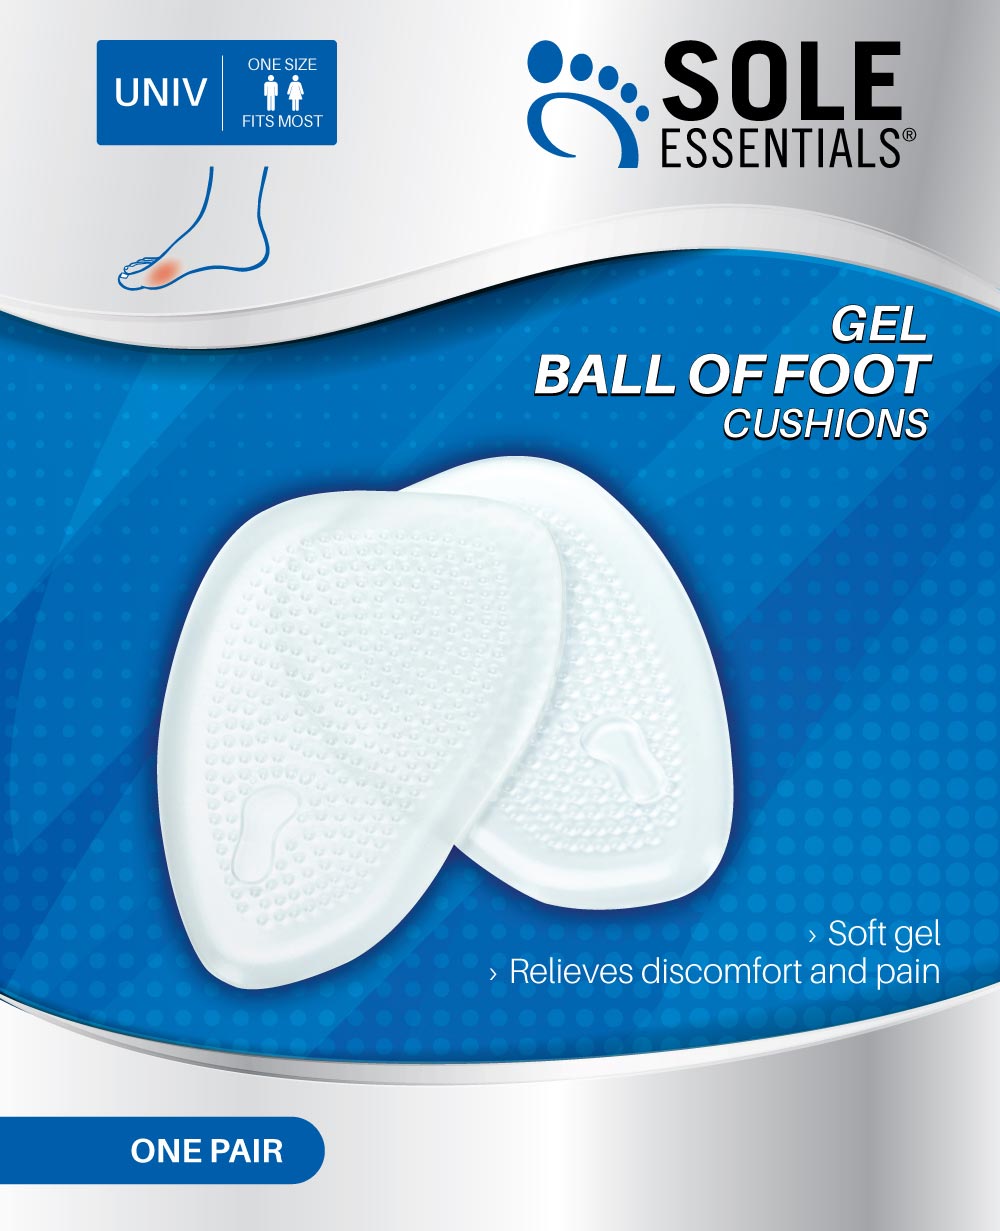 Sole Essentials Gel Ball of Foot Cushions